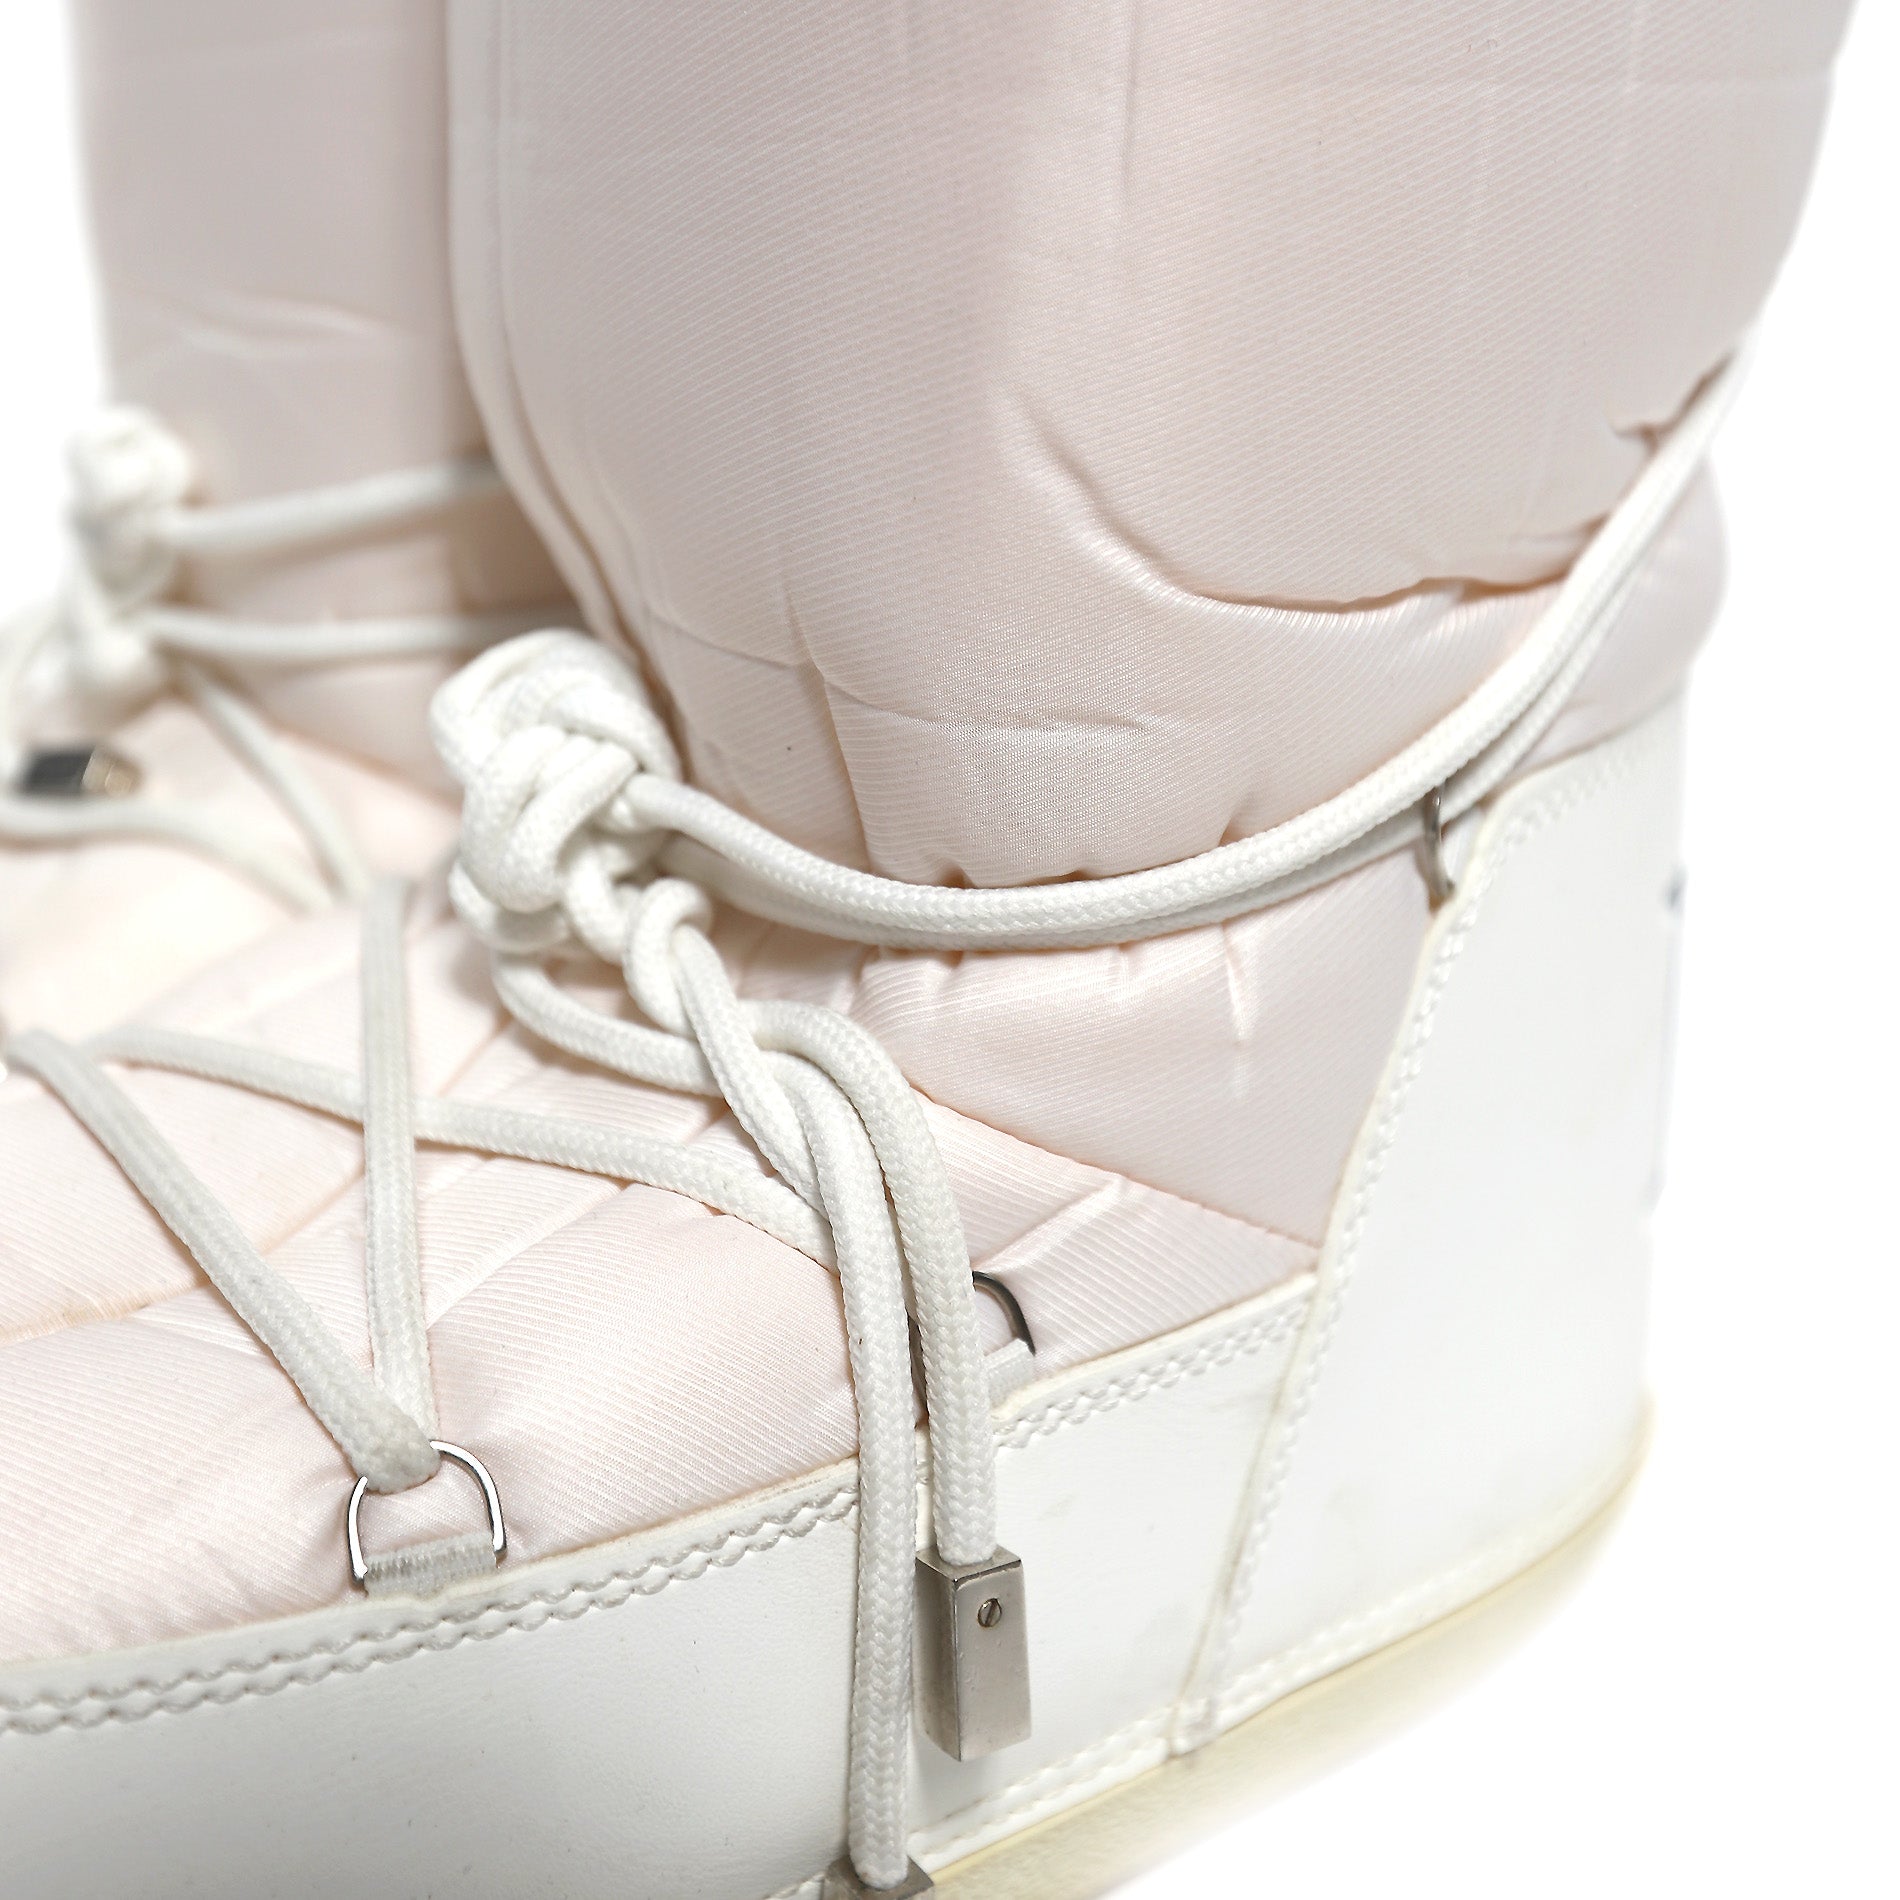 Christian Dior Pink Logo Moon Boots